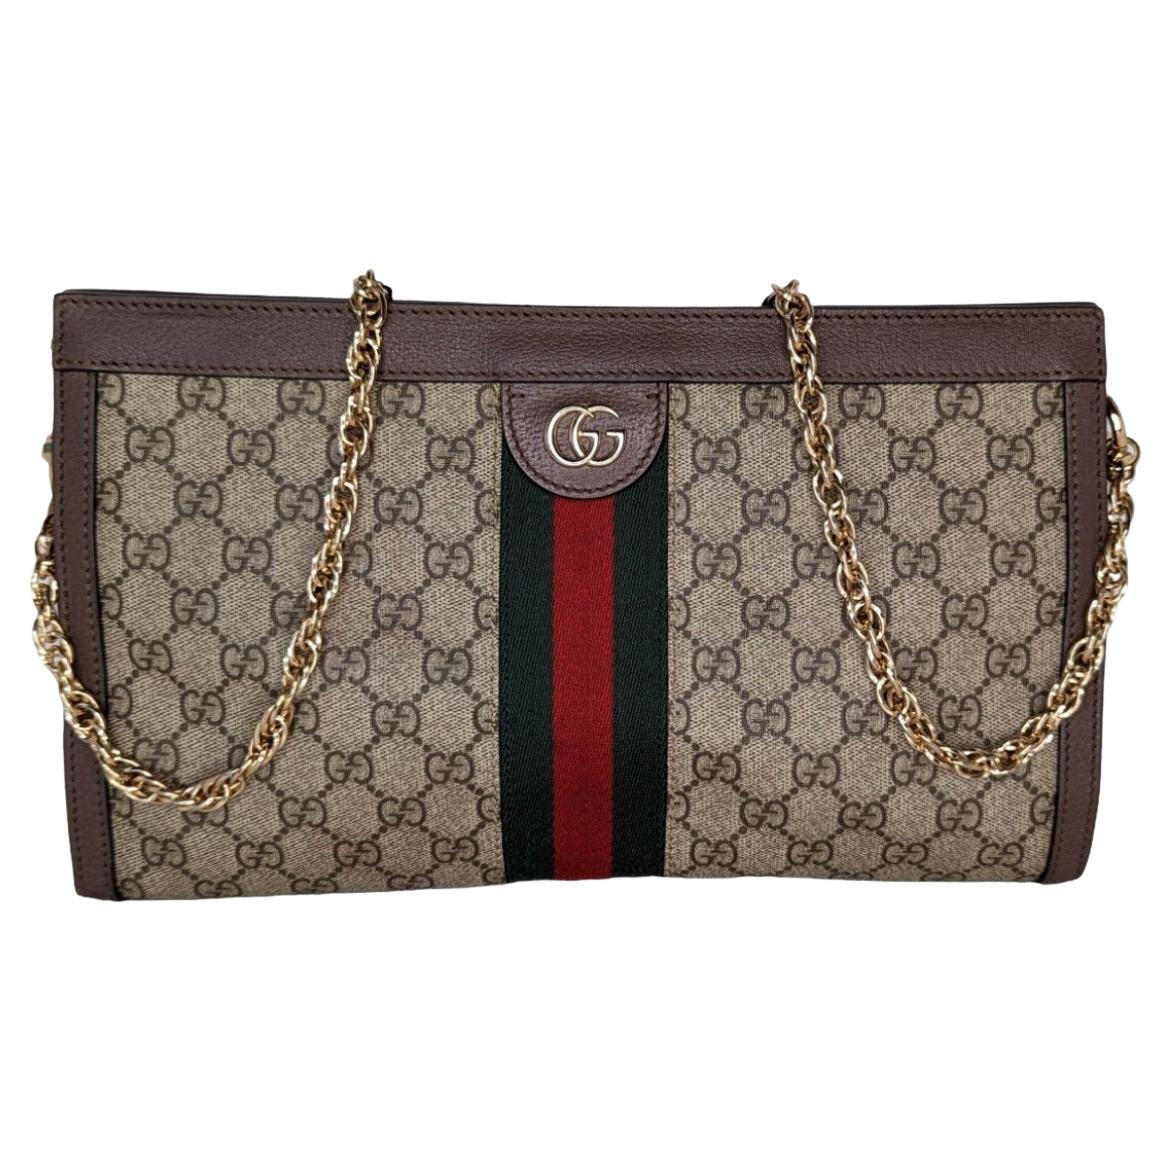 Gucci GG Supreme Monogram Web Medium Ophidia Chain Shoulder Bag